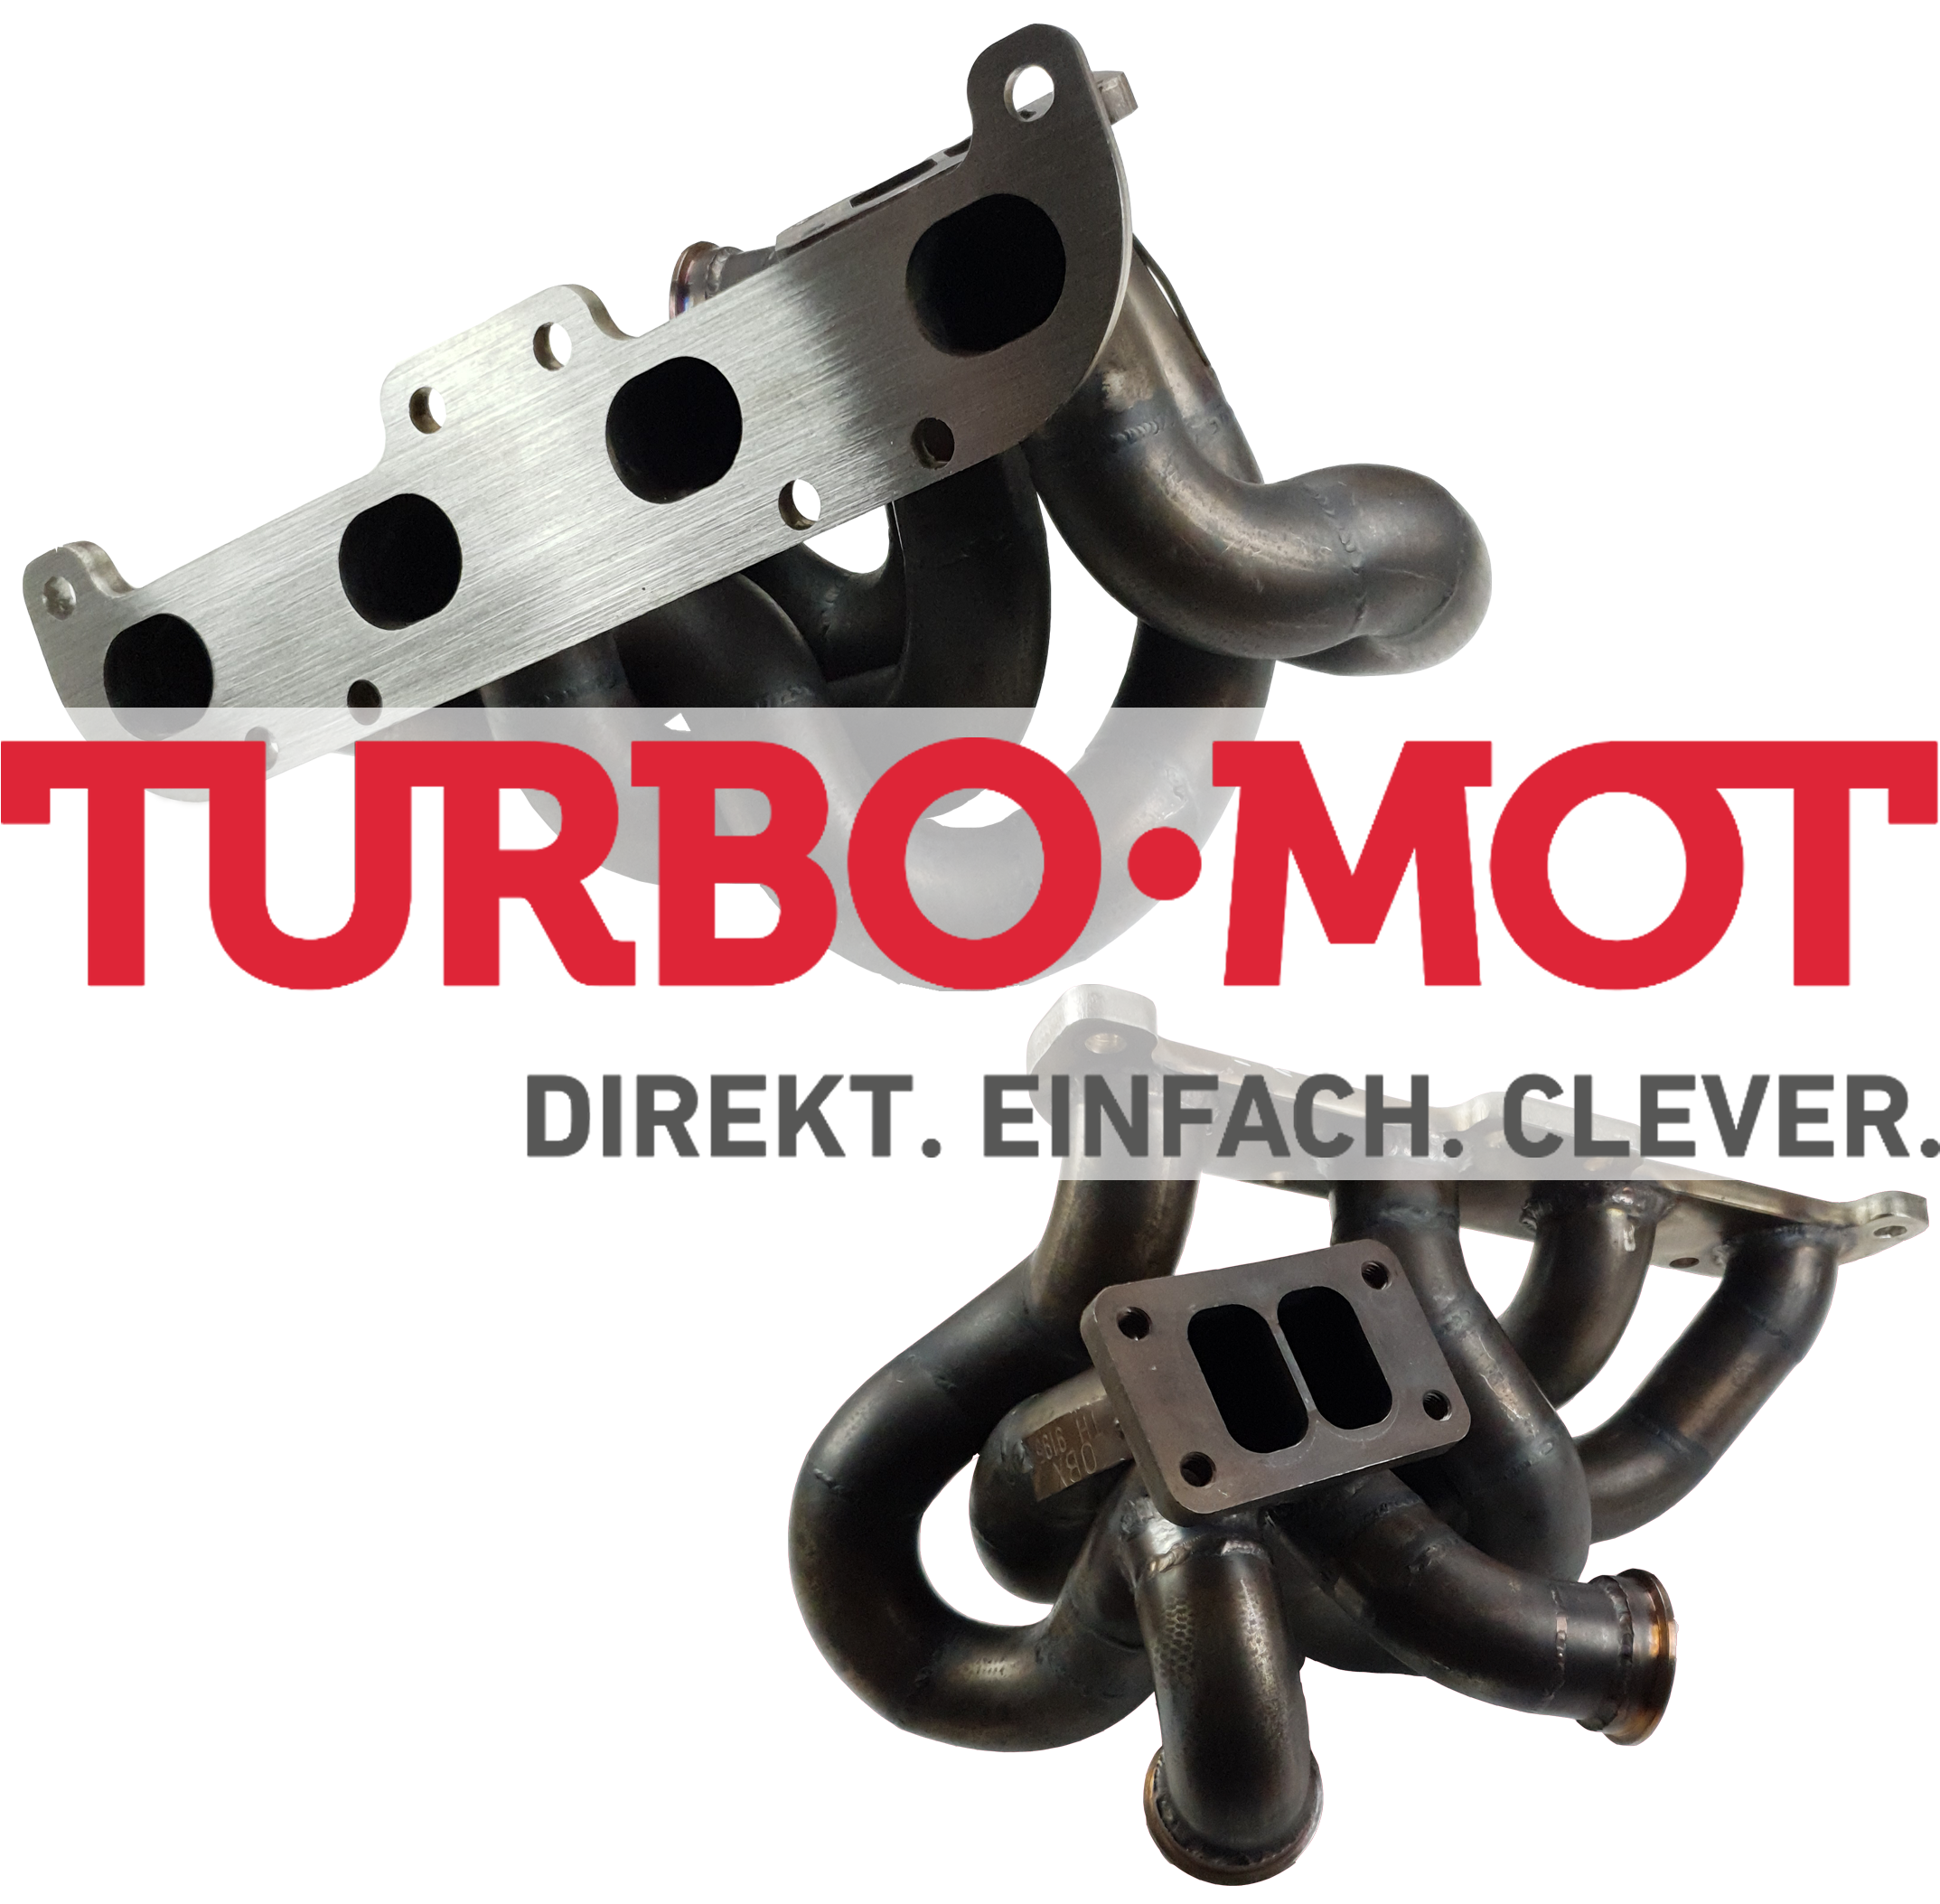 Bild 3 Turbo-Mot GmbH in Verl